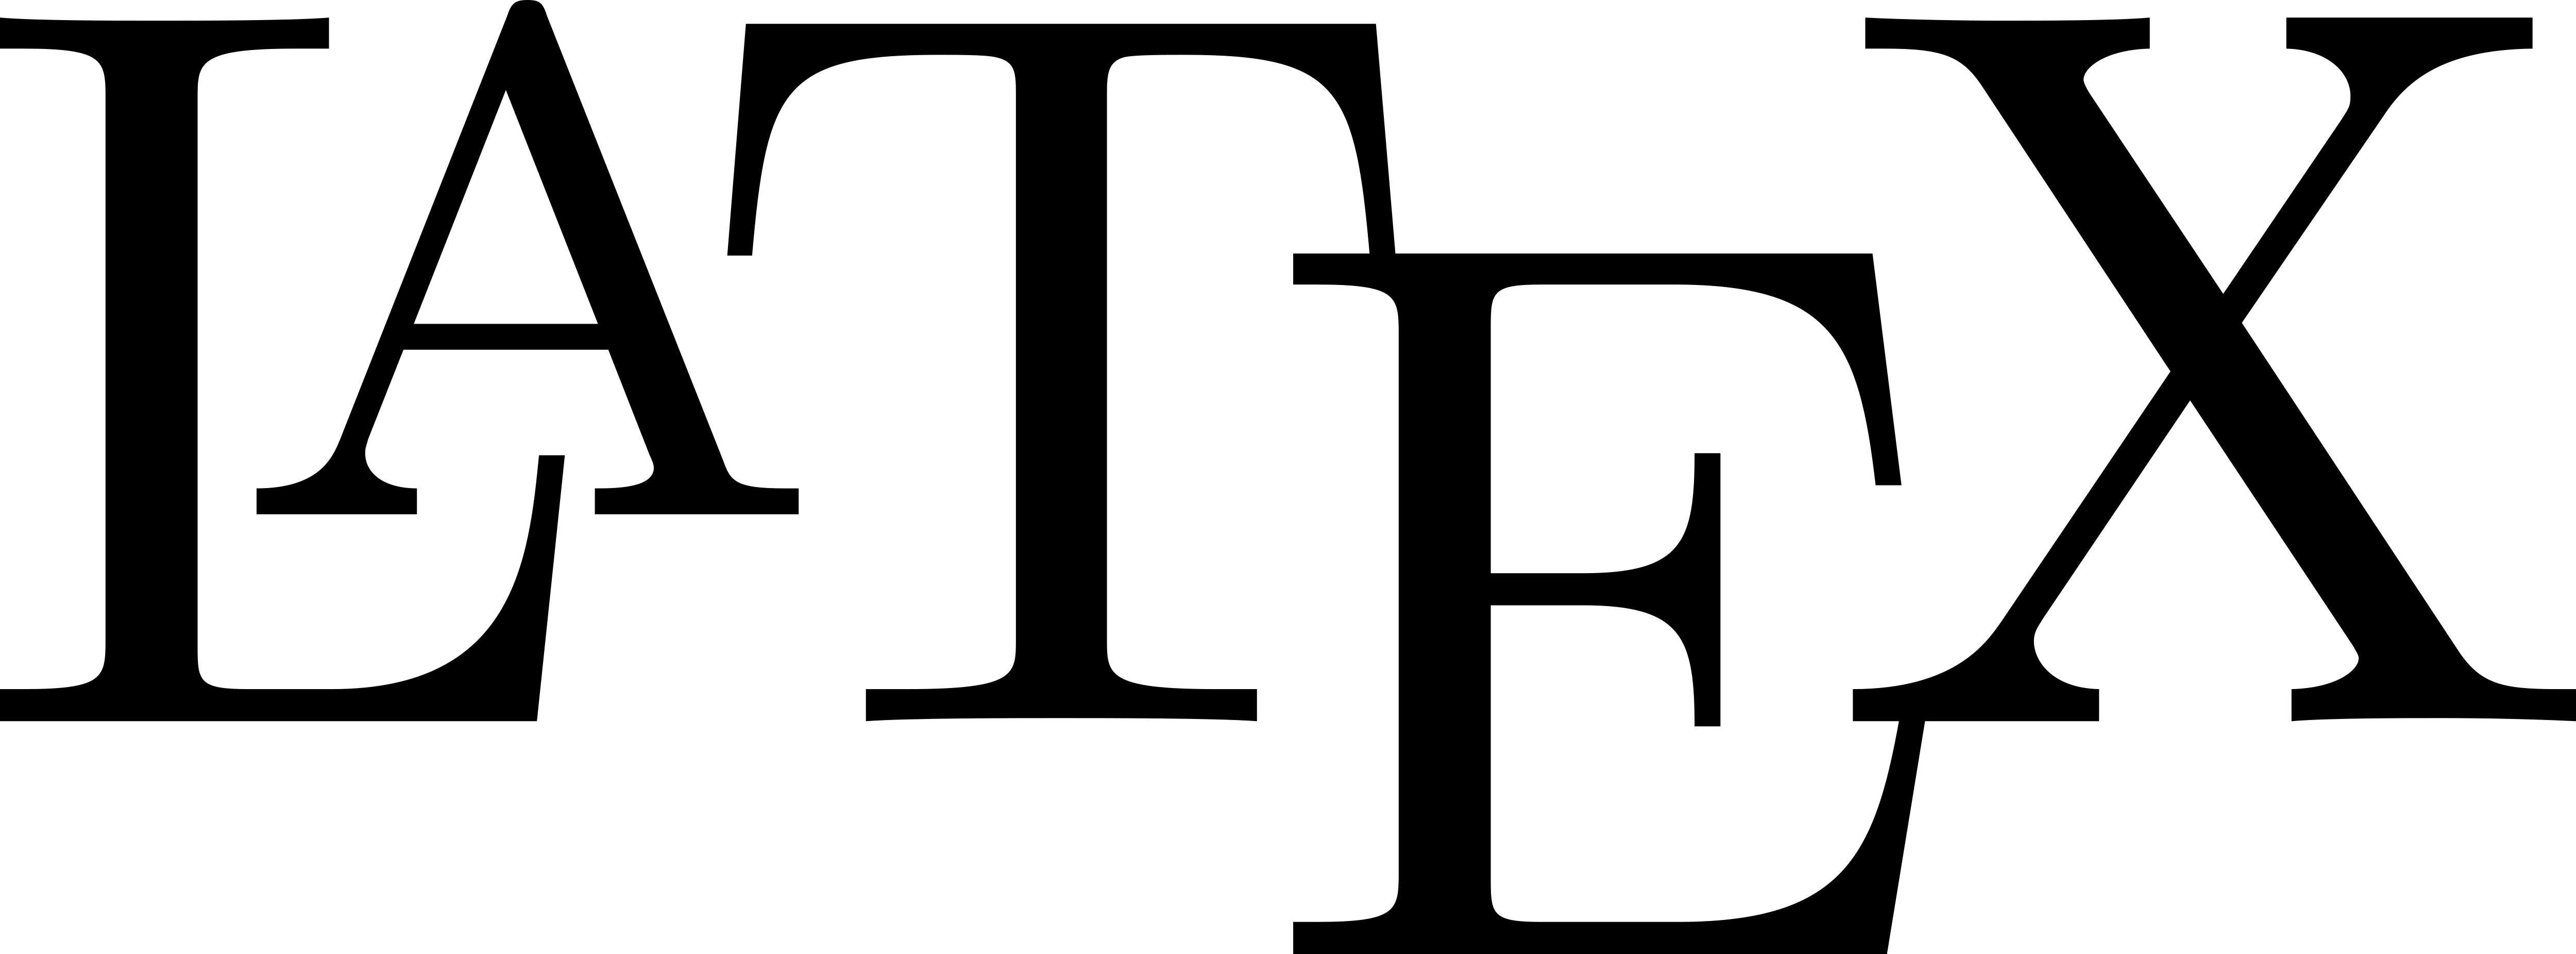 logo presentation latex